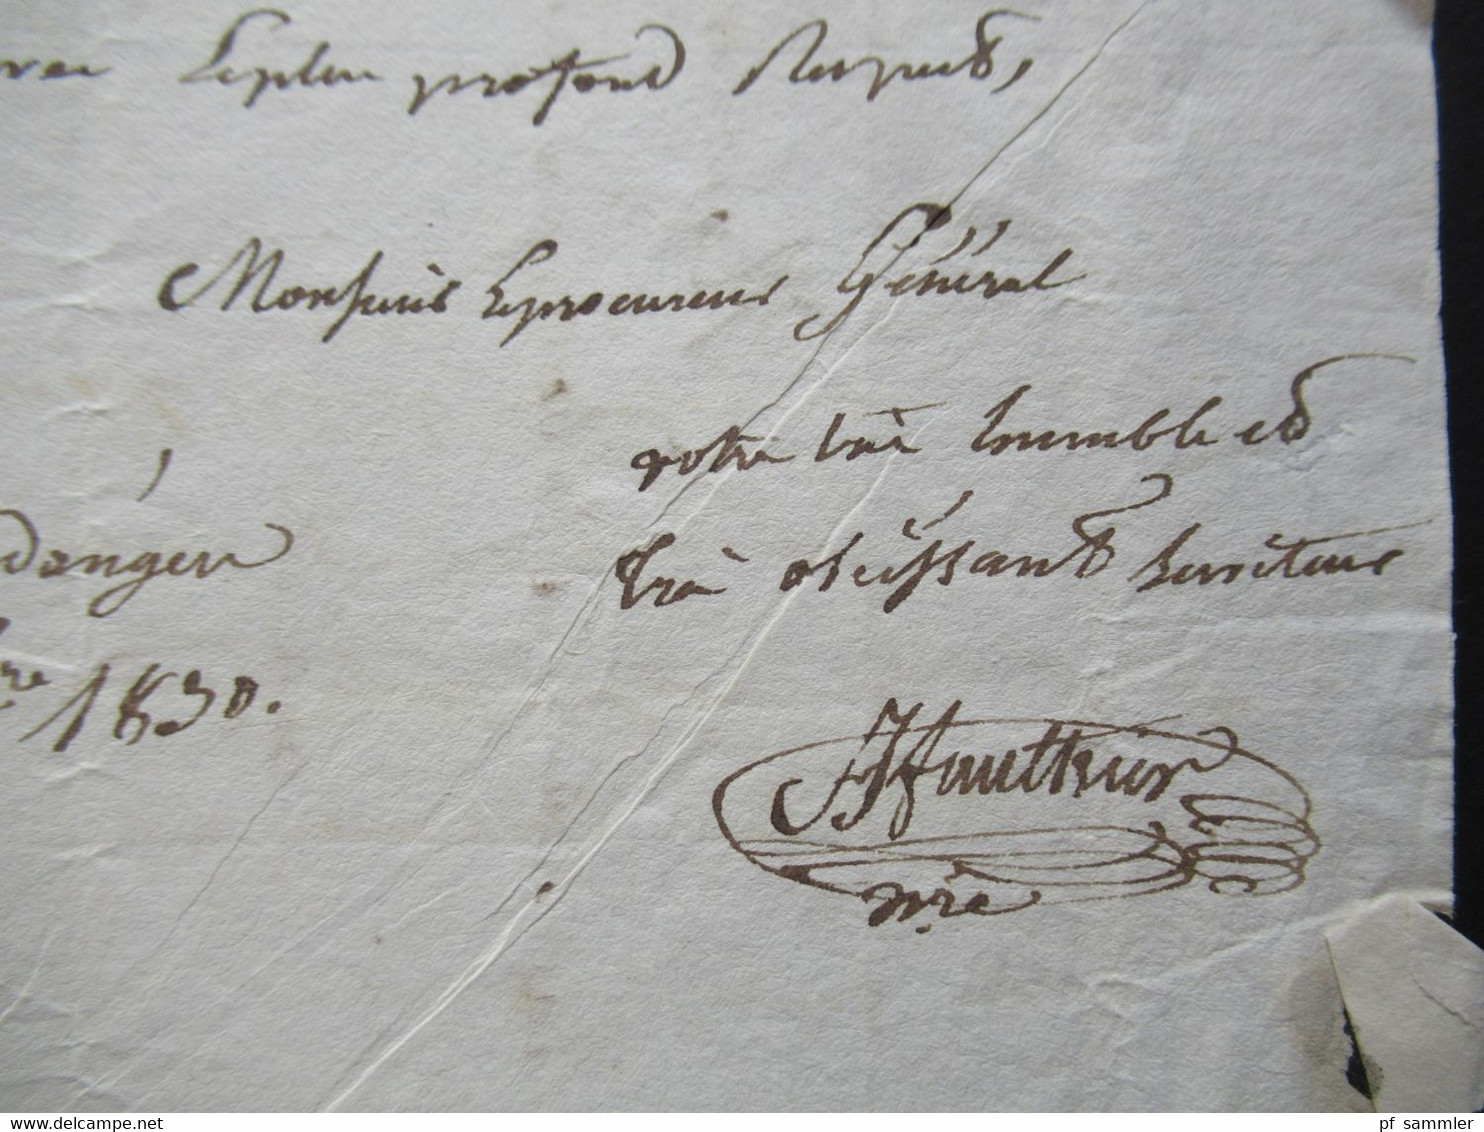 Frankreich 1830 Brief an General Jacques Charles Dubois in Angers mit Autograph / Unterschrift / Militaria